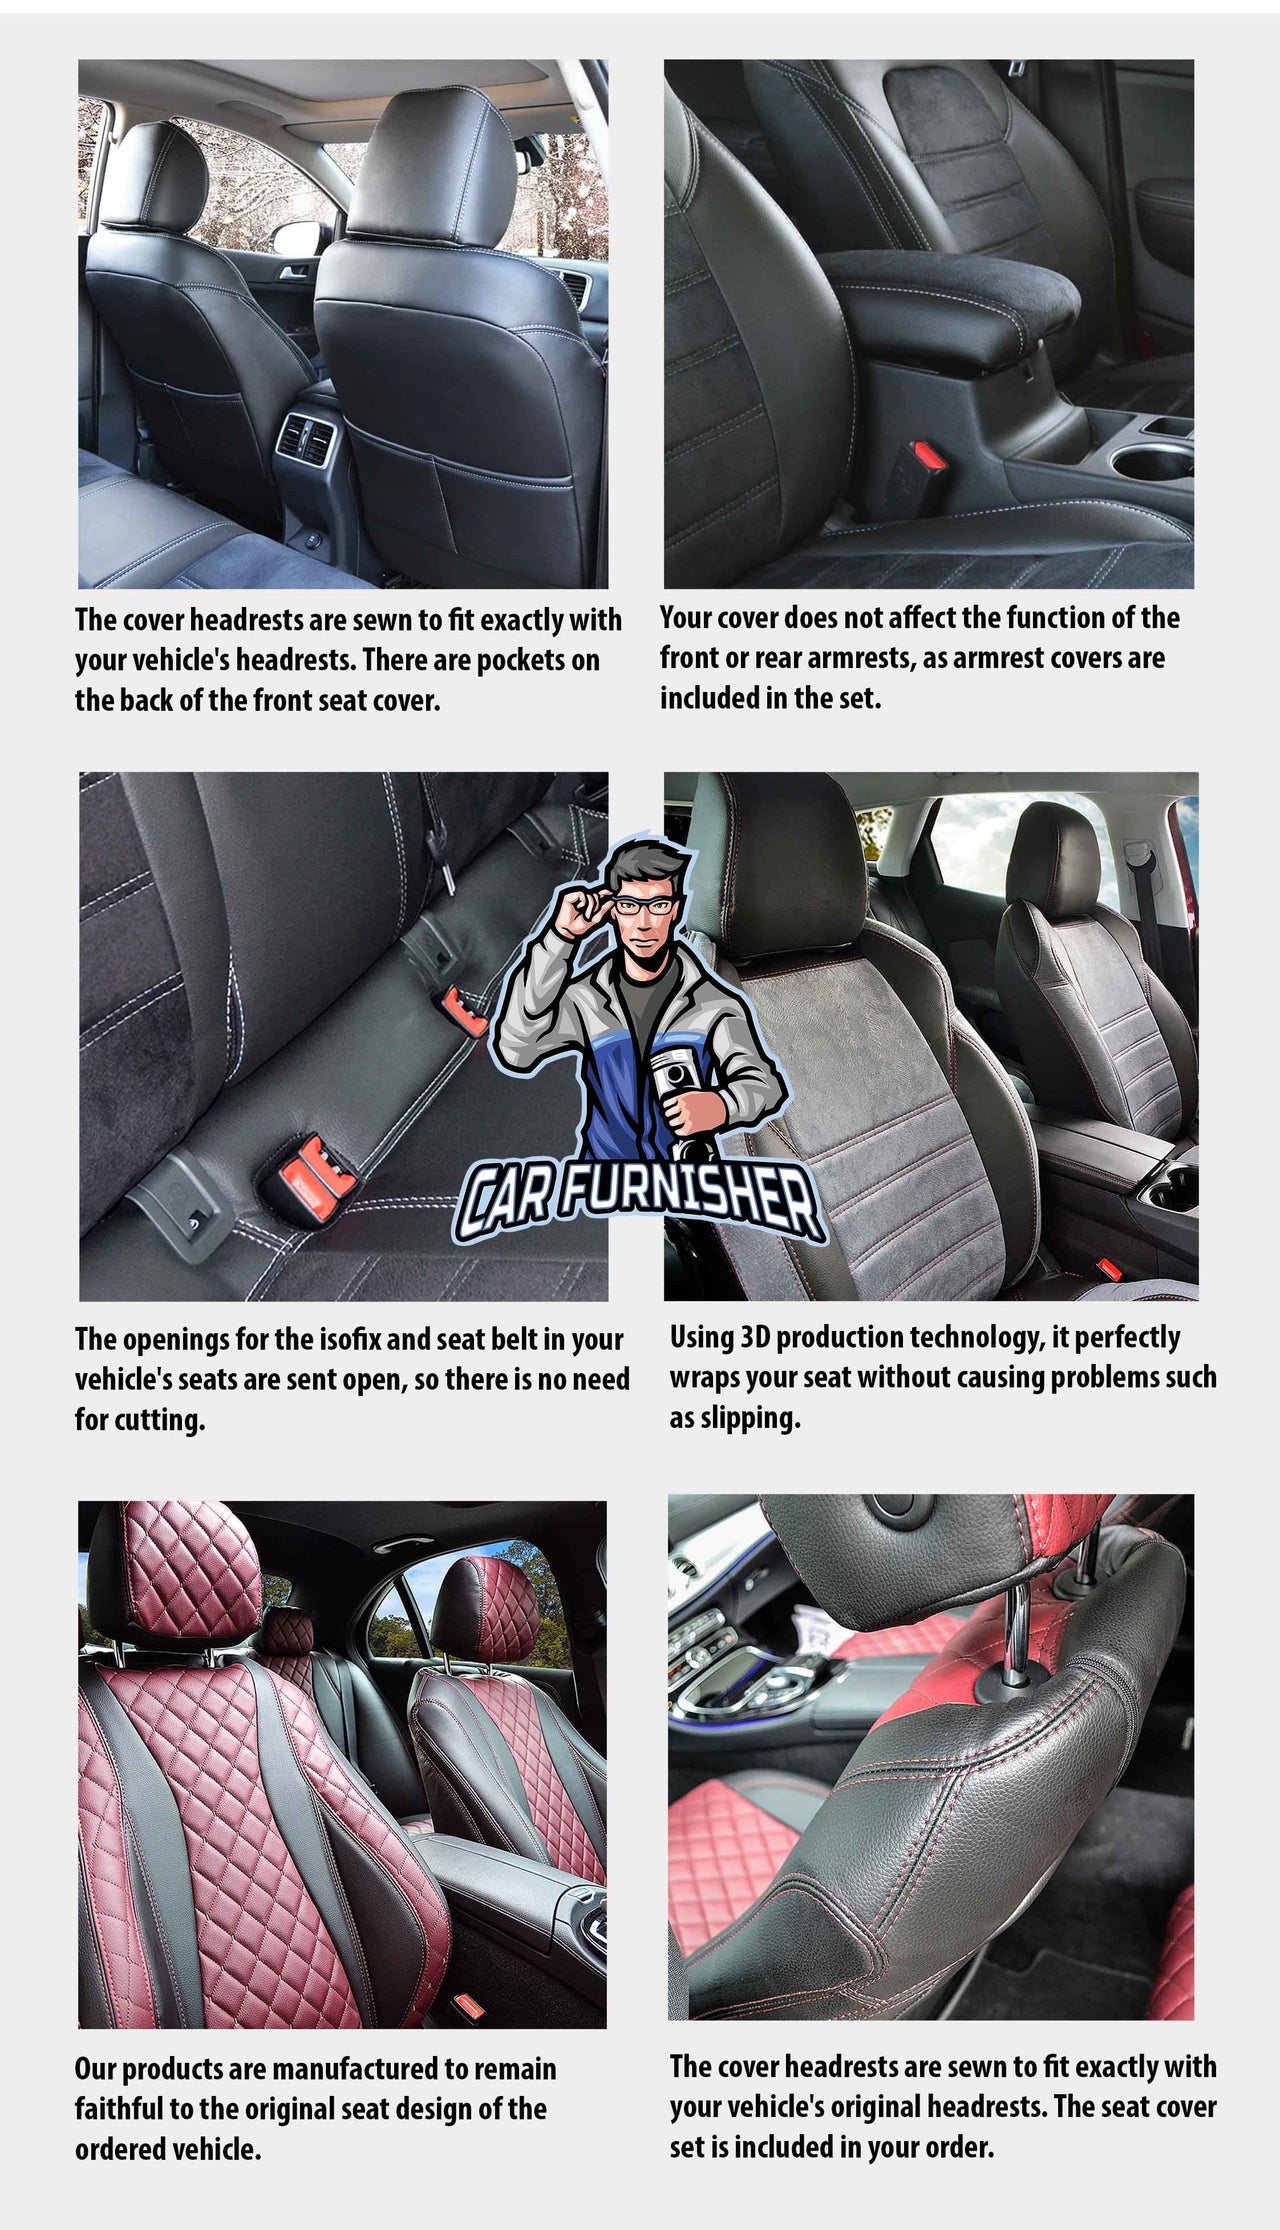 Scania R Seat Cover Original Jacquard Design Gray Front Seats (2 Seats + Handrest + Headrests) Jacquard Fabric